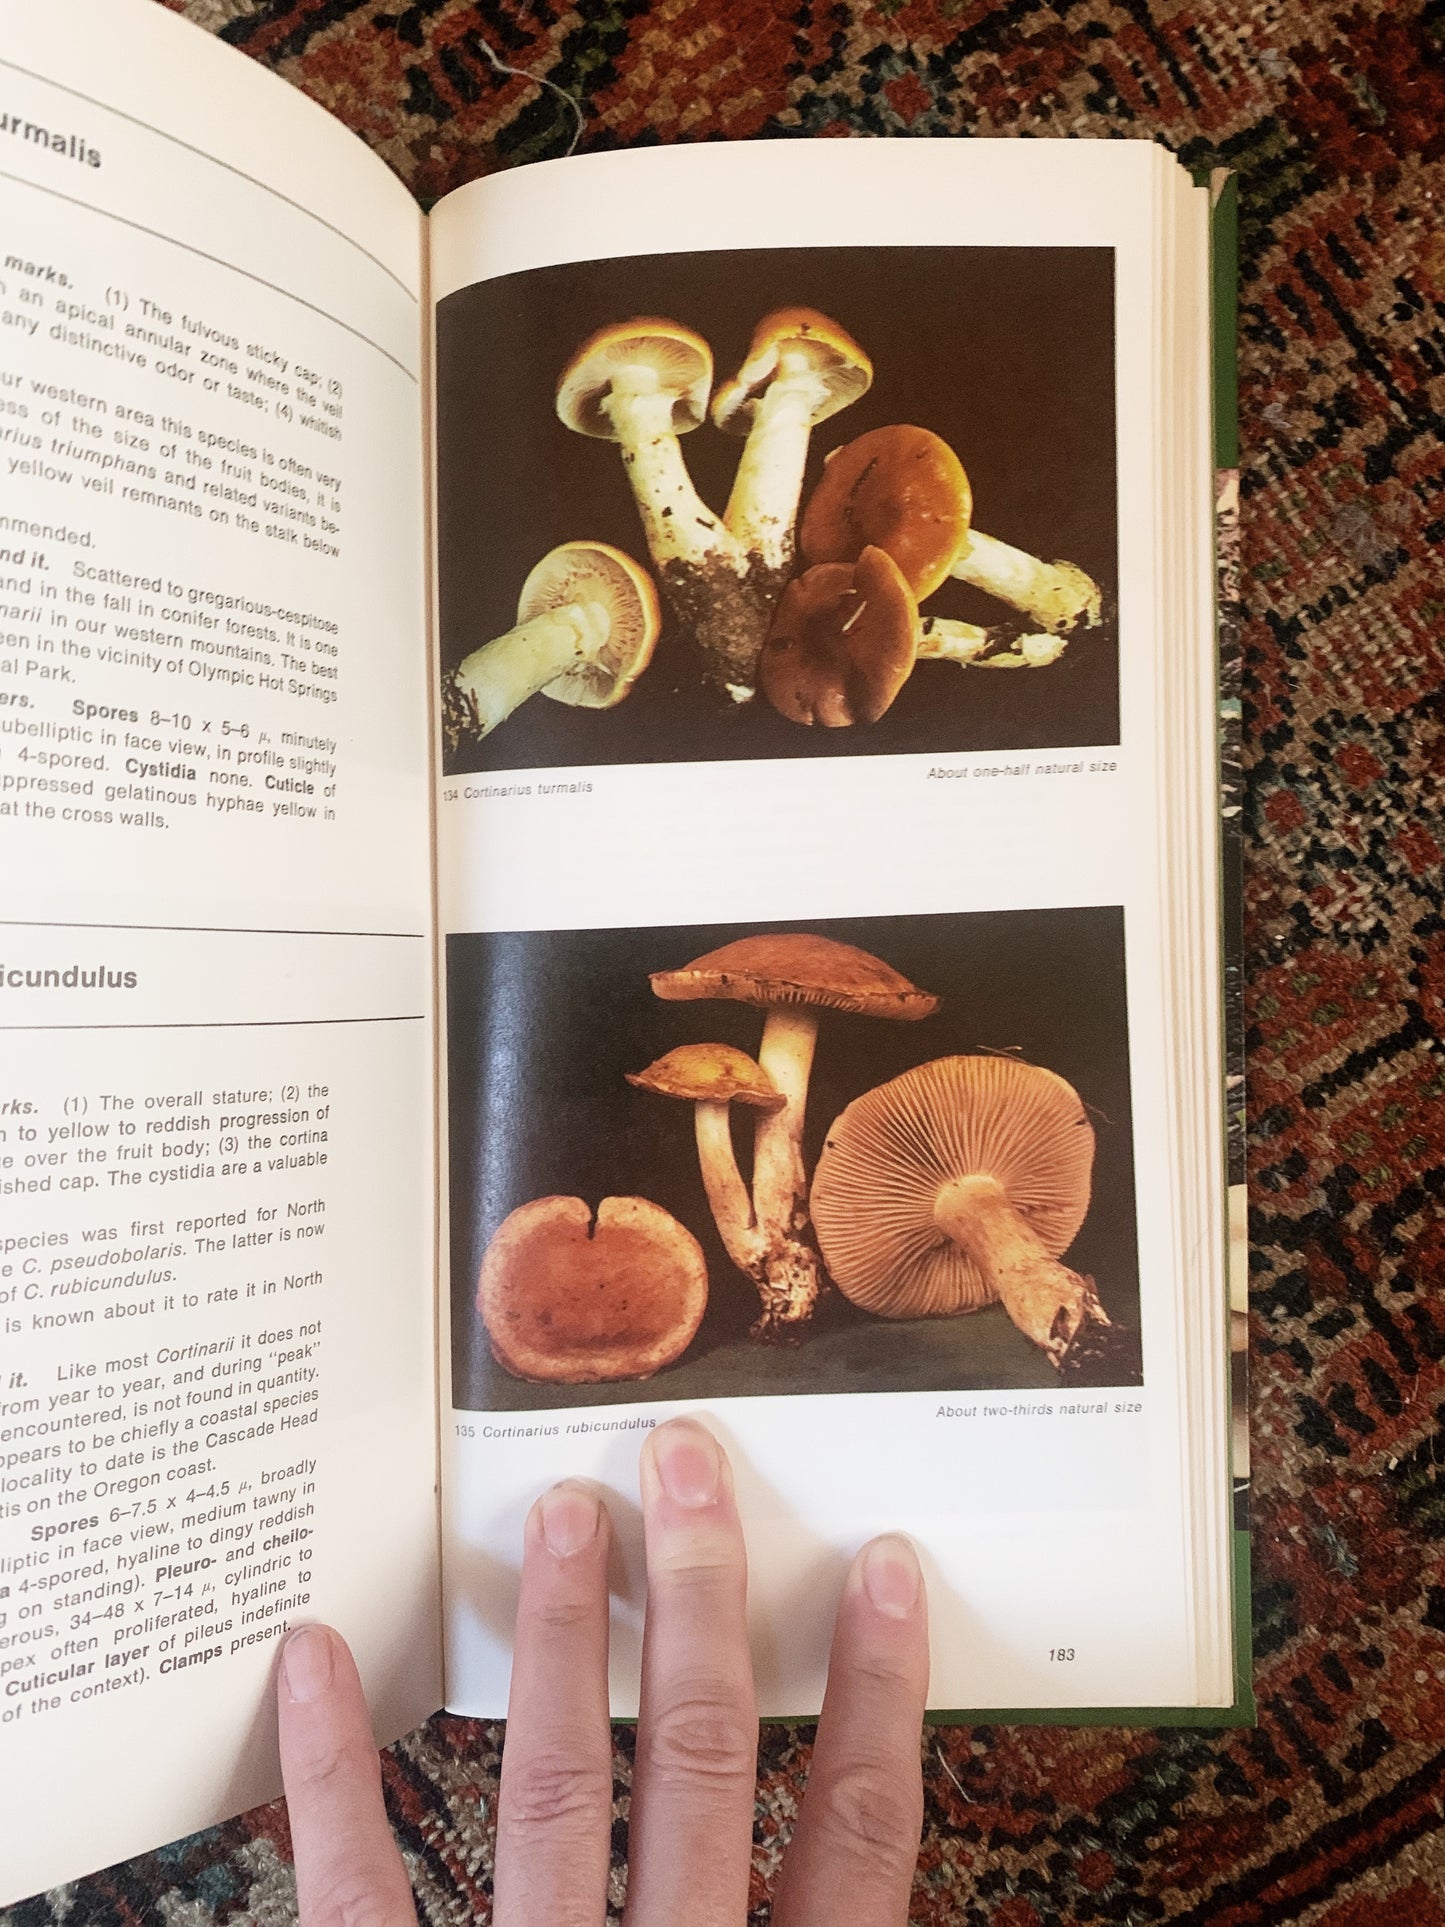 Vintage Mushroom Hard Cover Field Guide